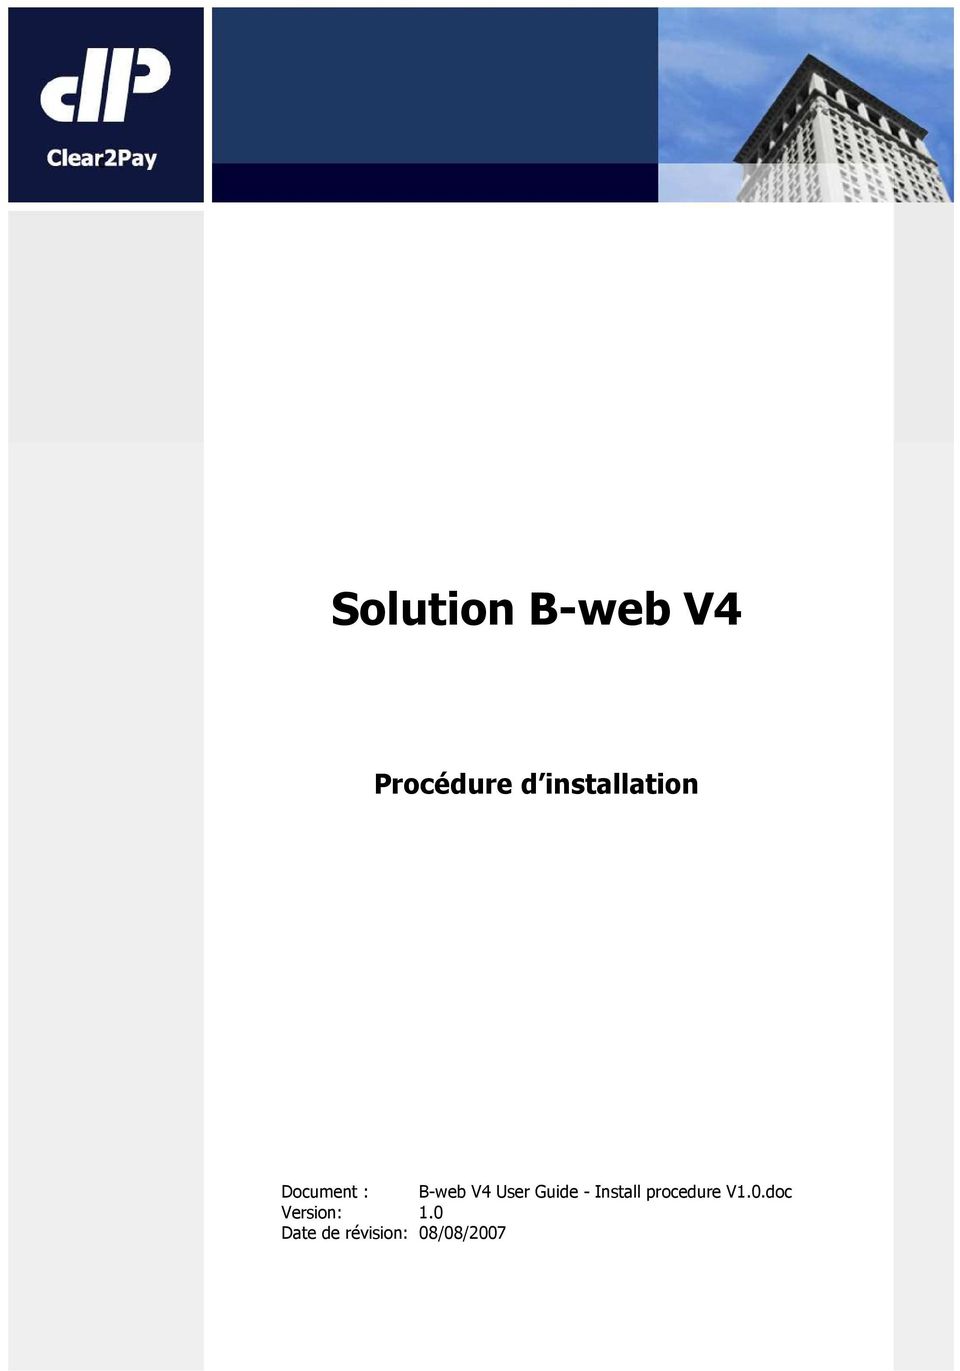 procedure V1.0.doc Version: 1.